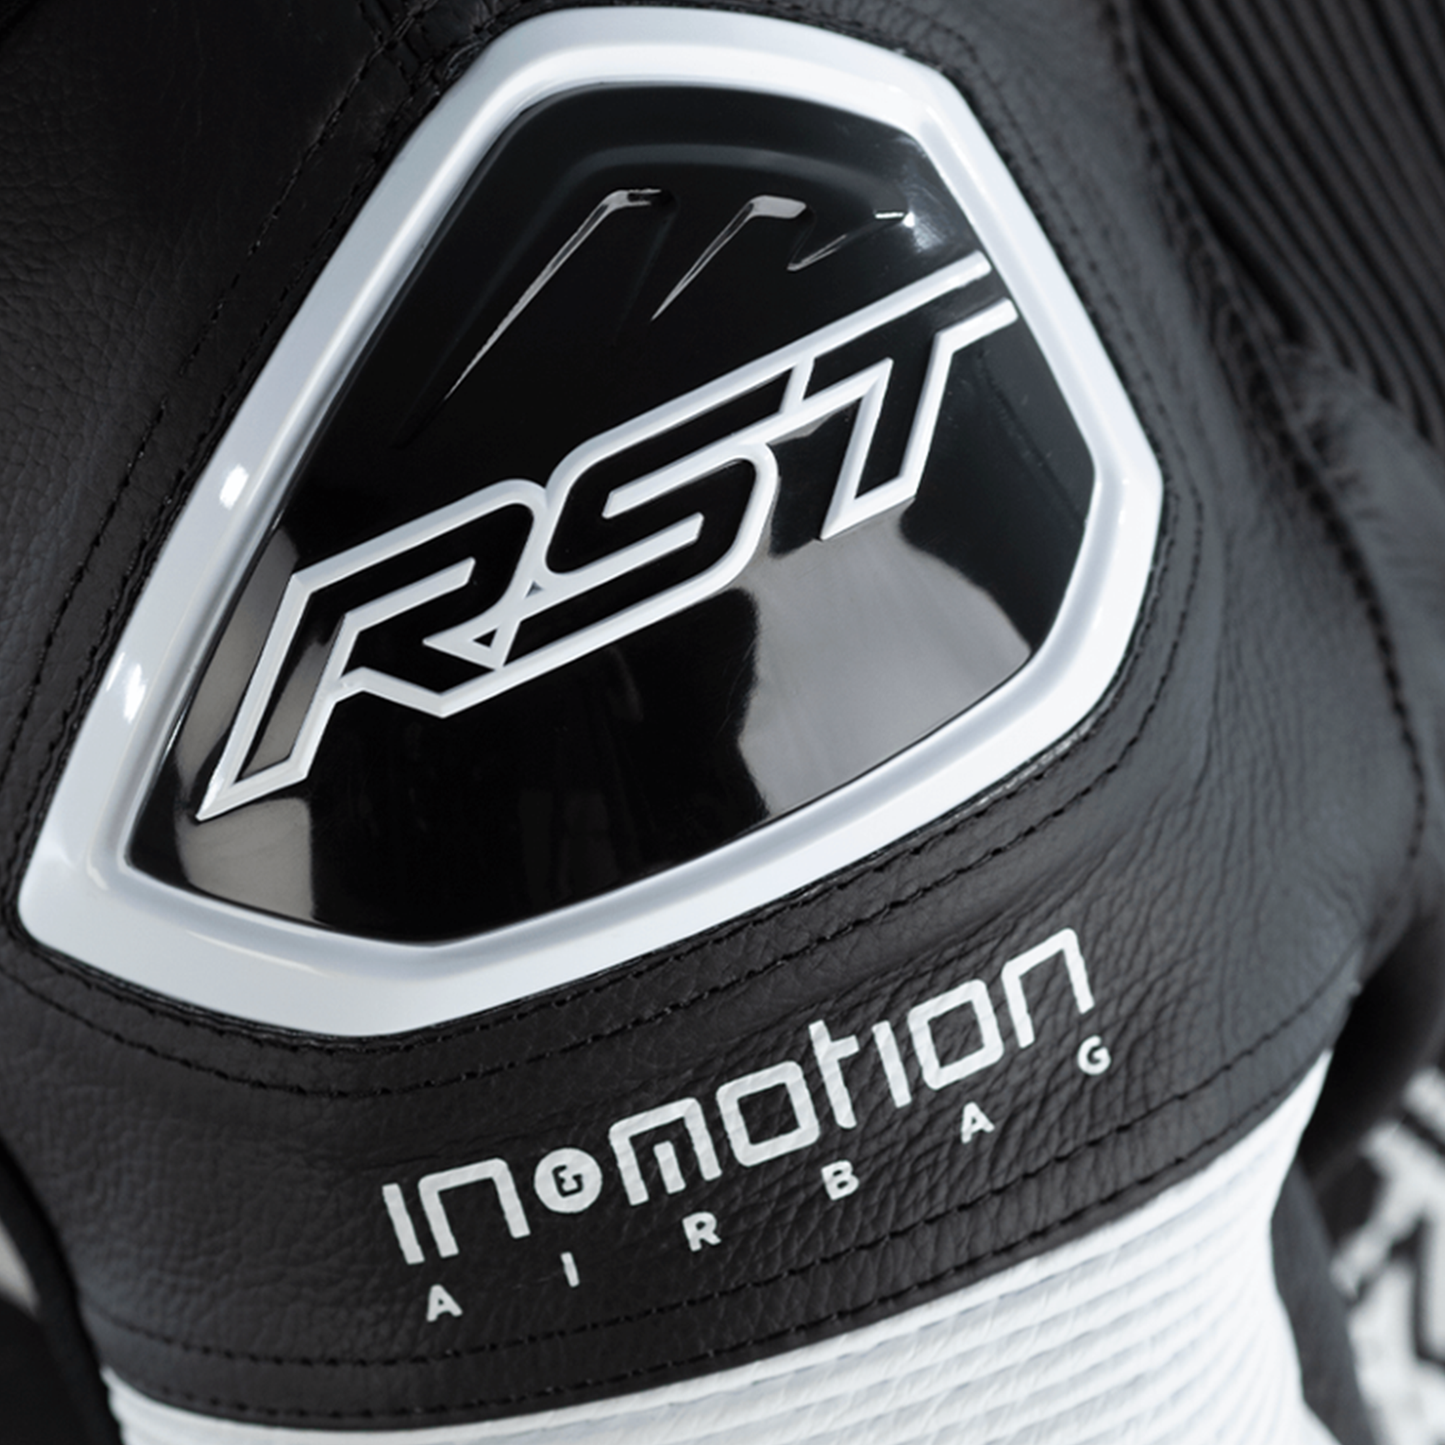 RST Pro Series Evo Airbag Men's Leather Suit - White/Black